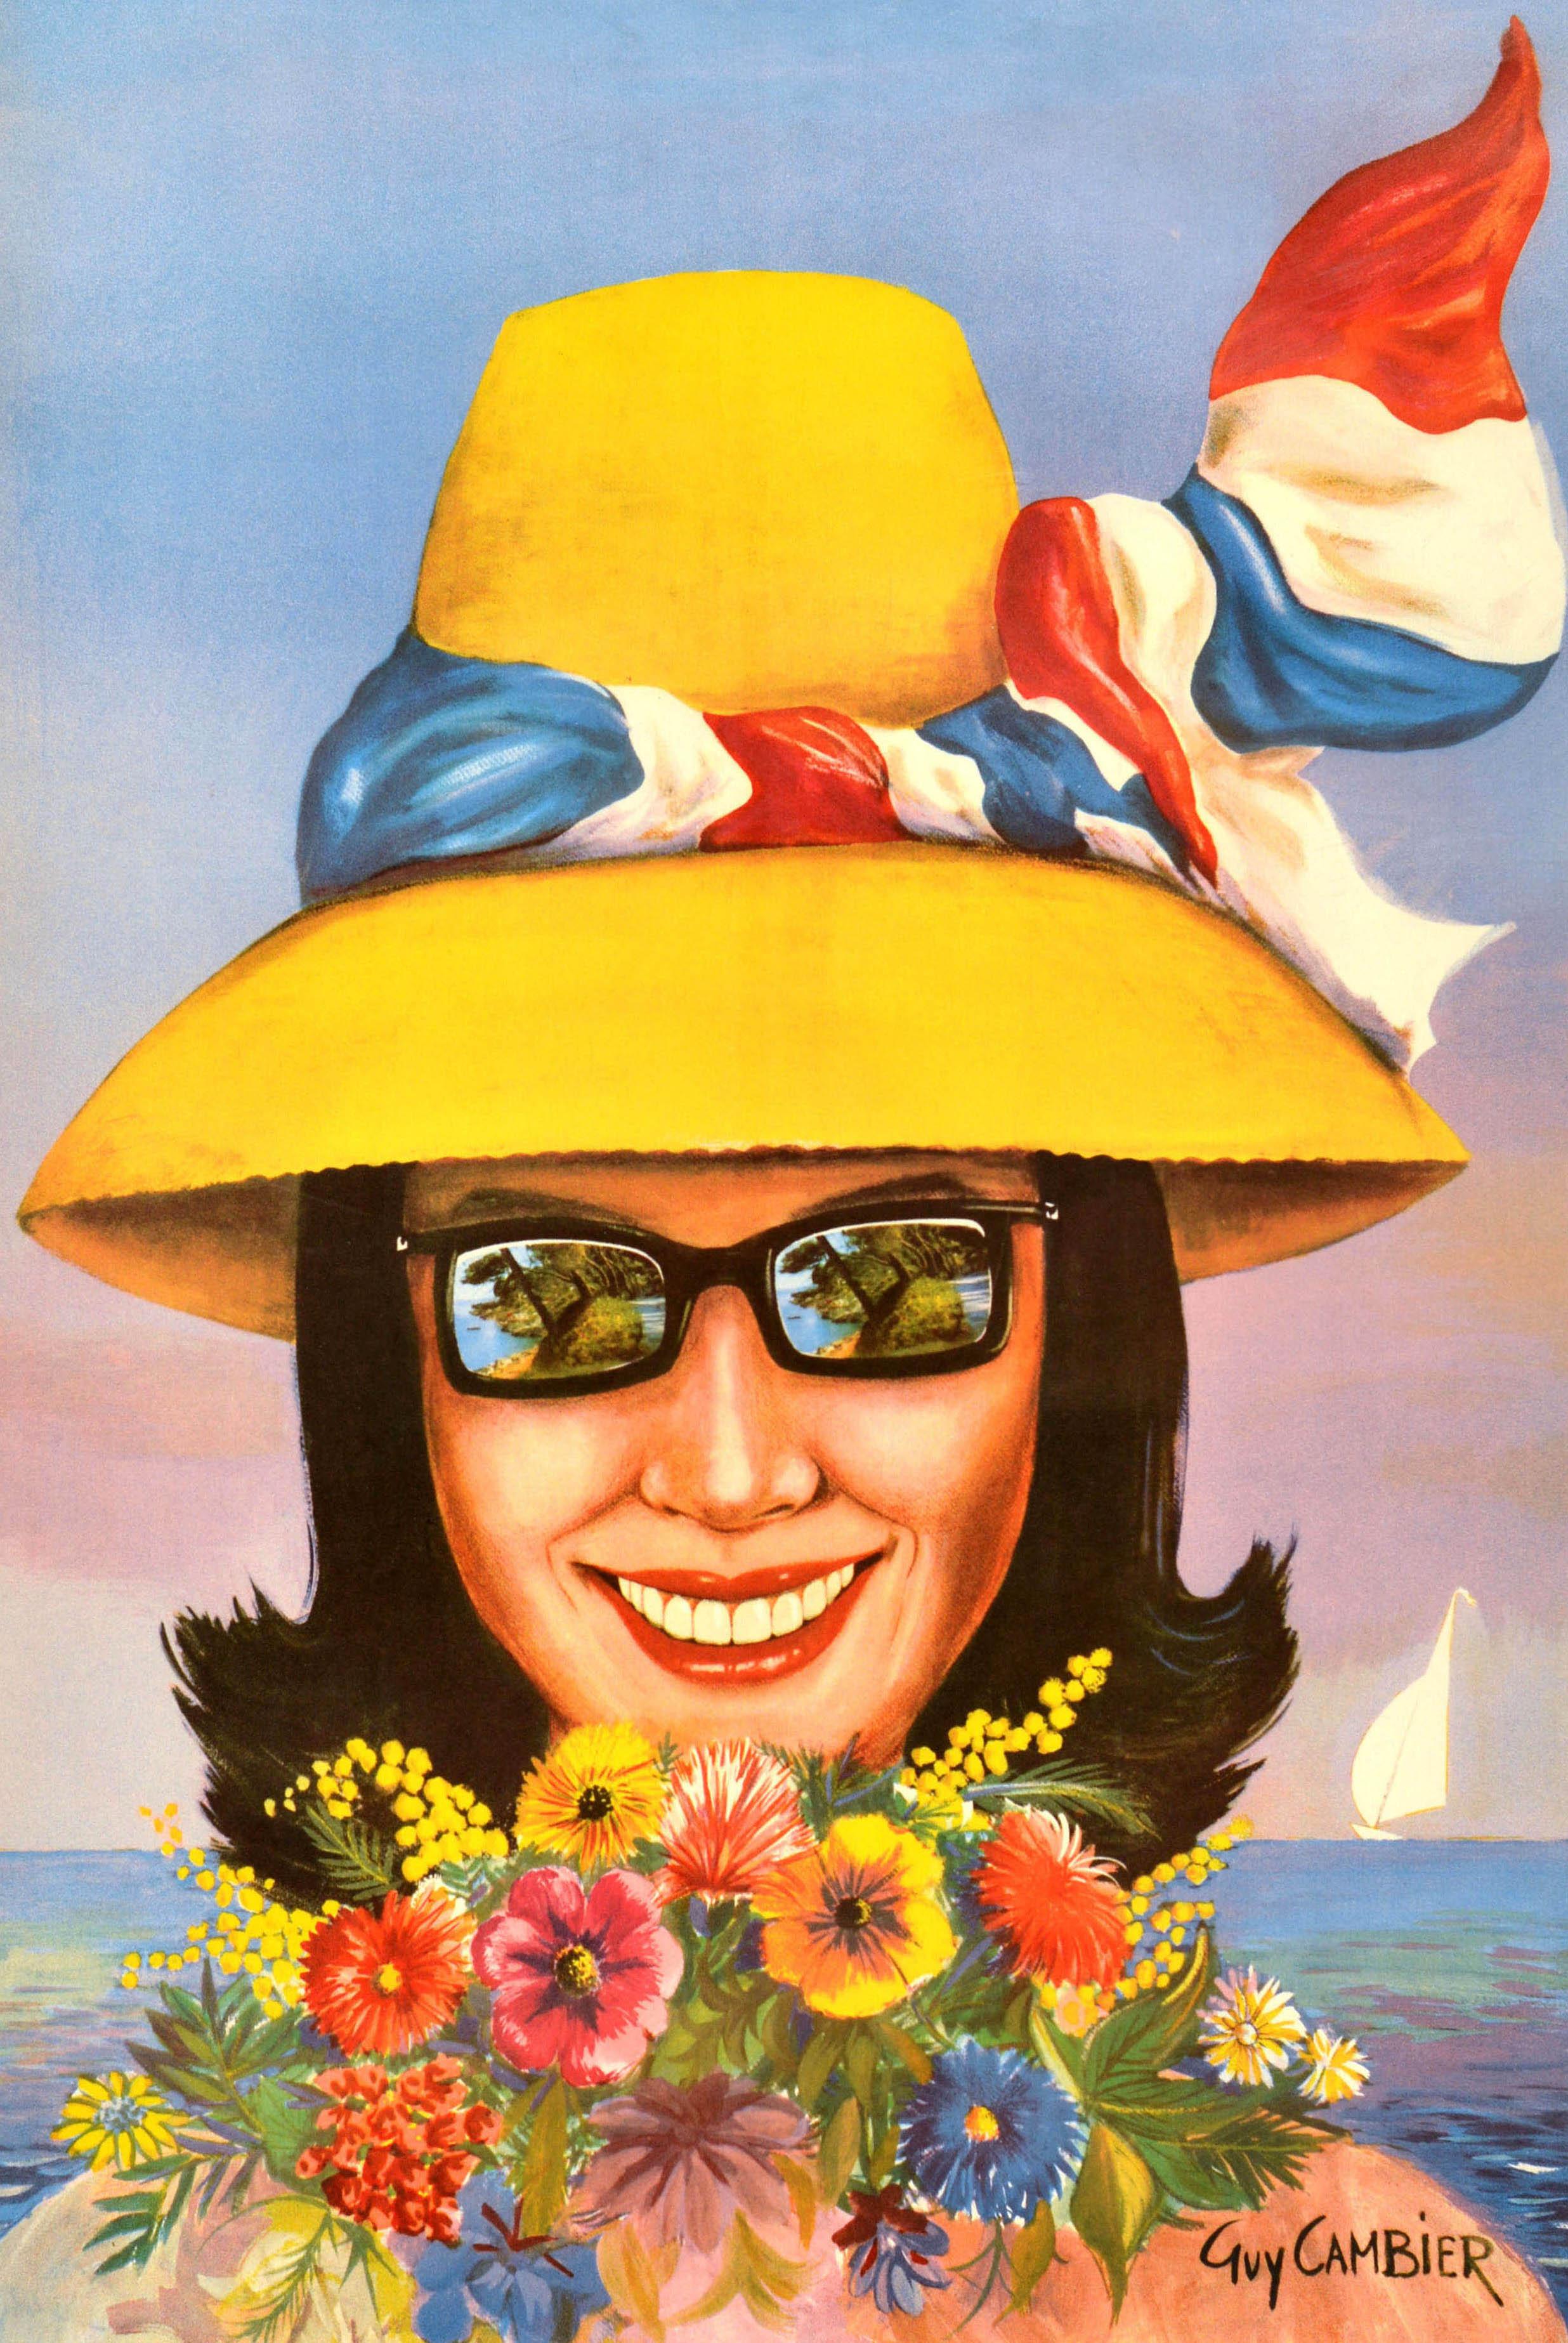 Original Vintage Travel Poster Roquebrune Cap Martin Riviera Cote d'Azur France - Print by Guy Cambier